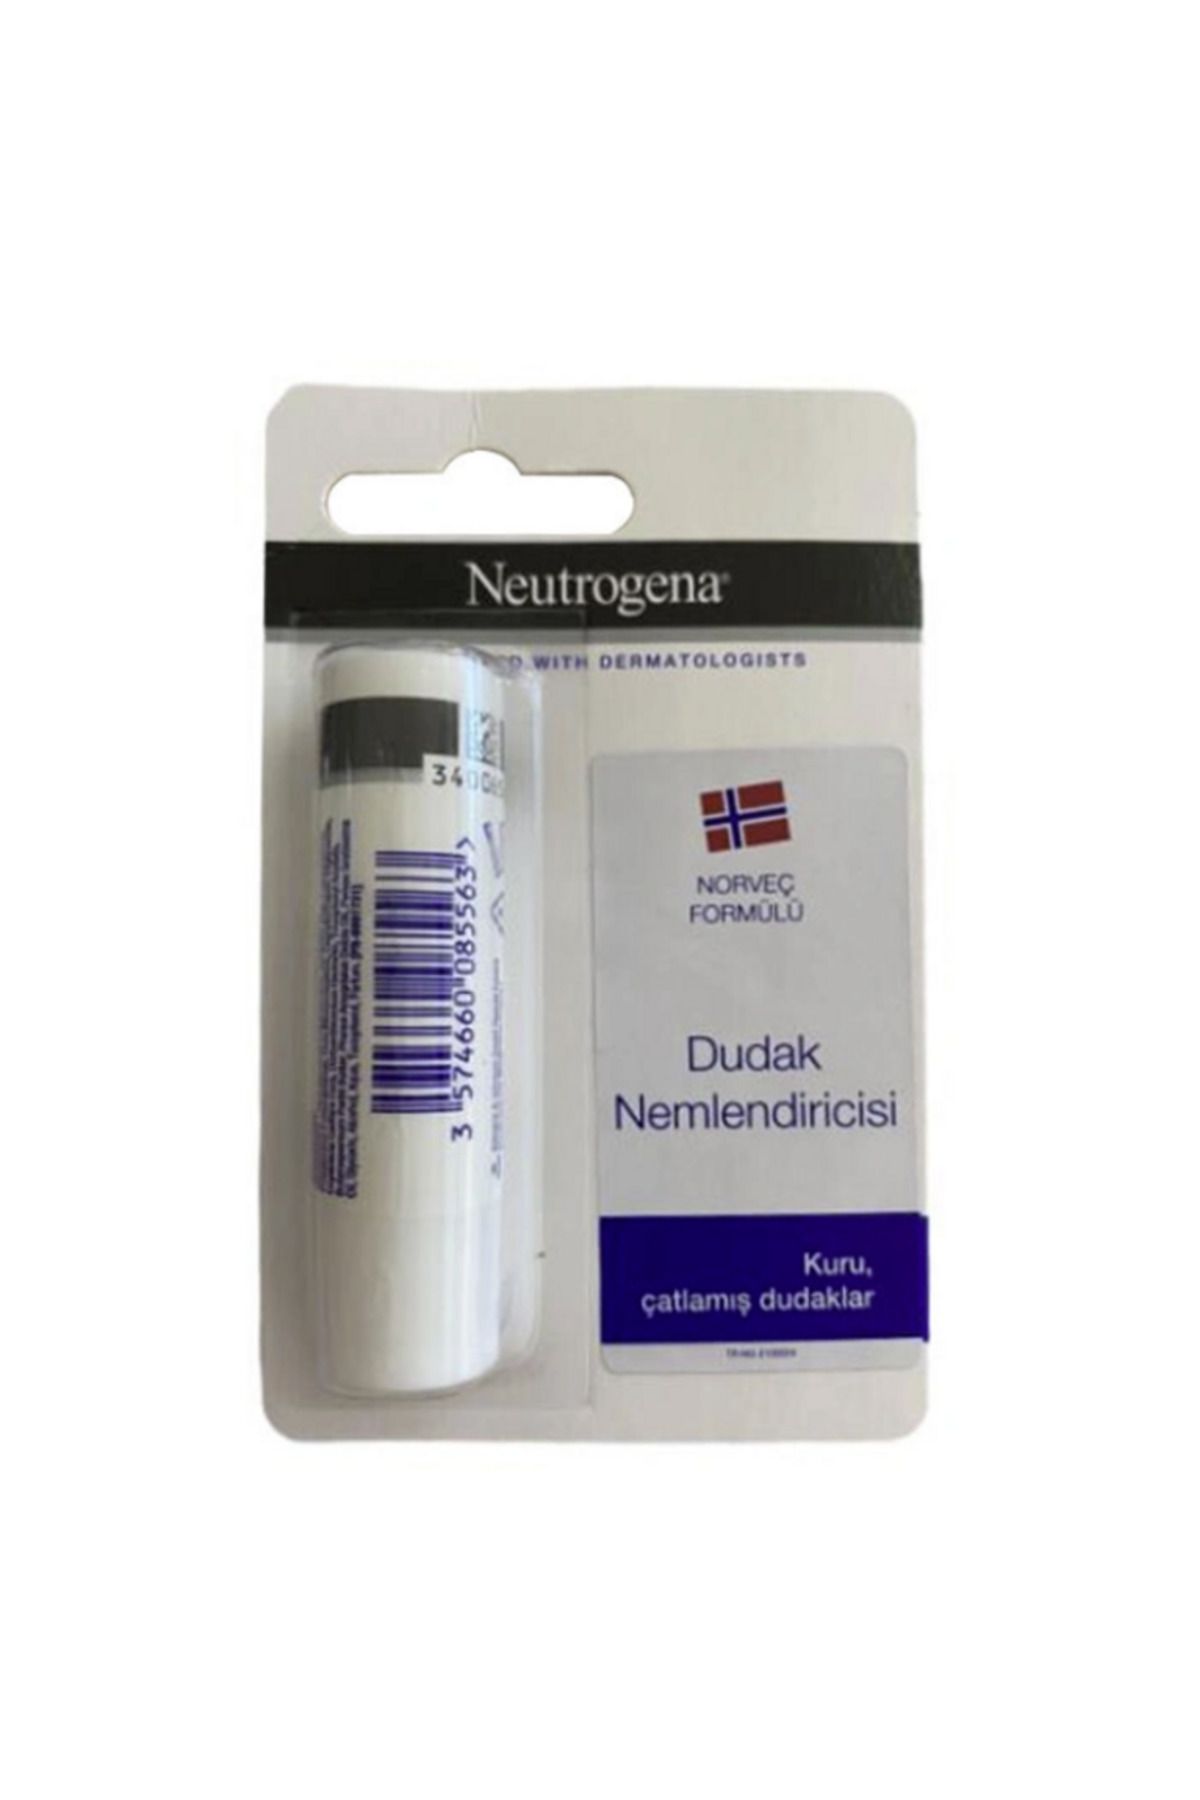 Neutrogena Dudak Nemlendiricisi 4.8 g- MFREYON00314